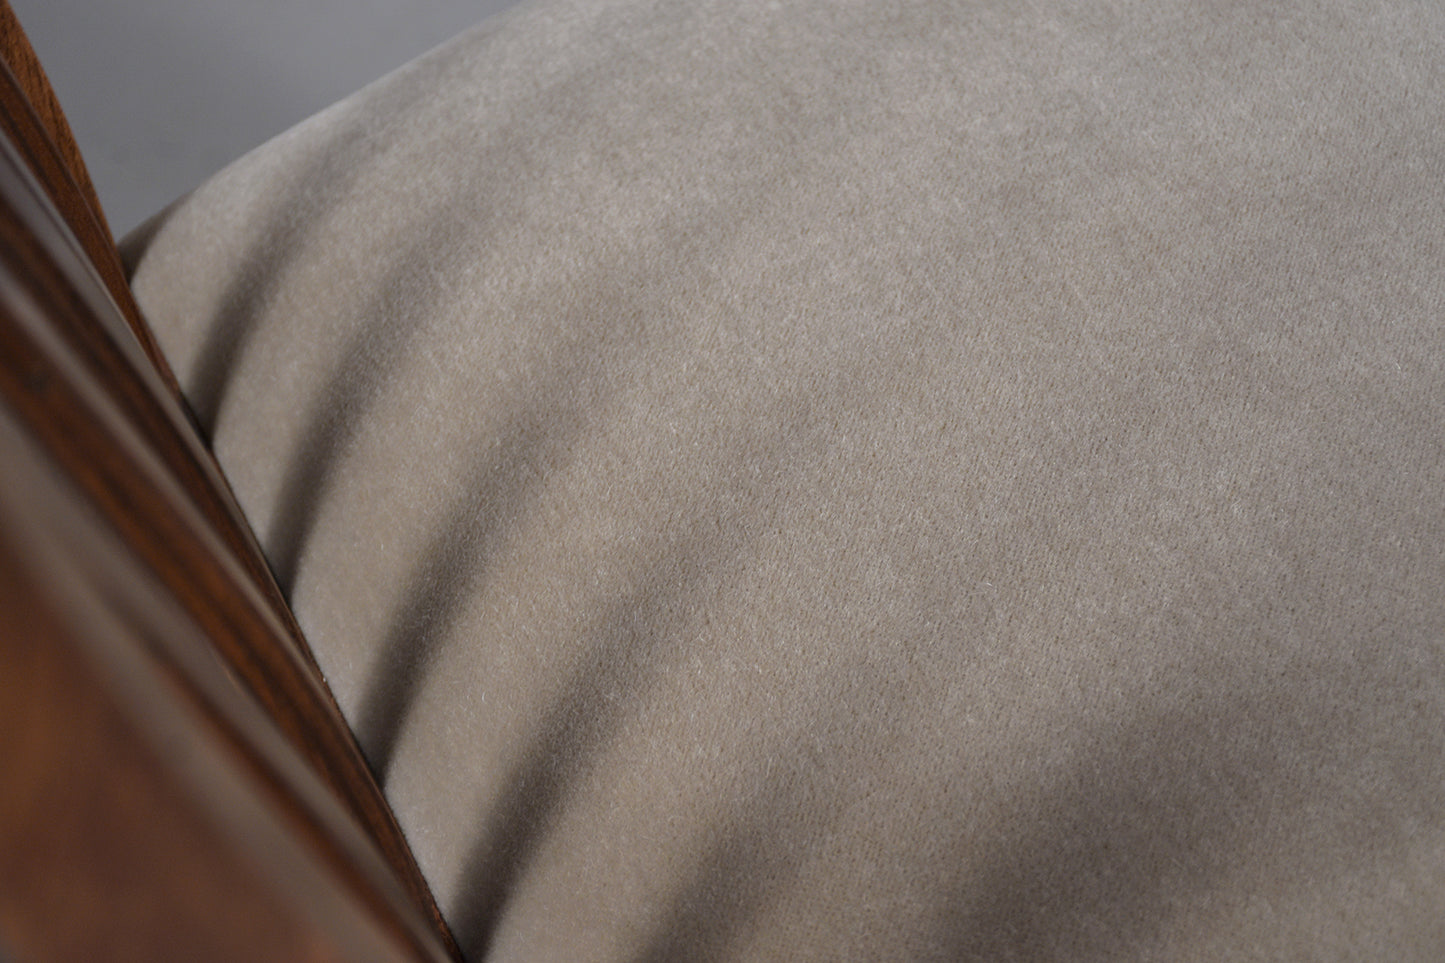 Vintage 1960s Mid-Century Modern Walnut Armchairs: Elegance & Comfort Restored